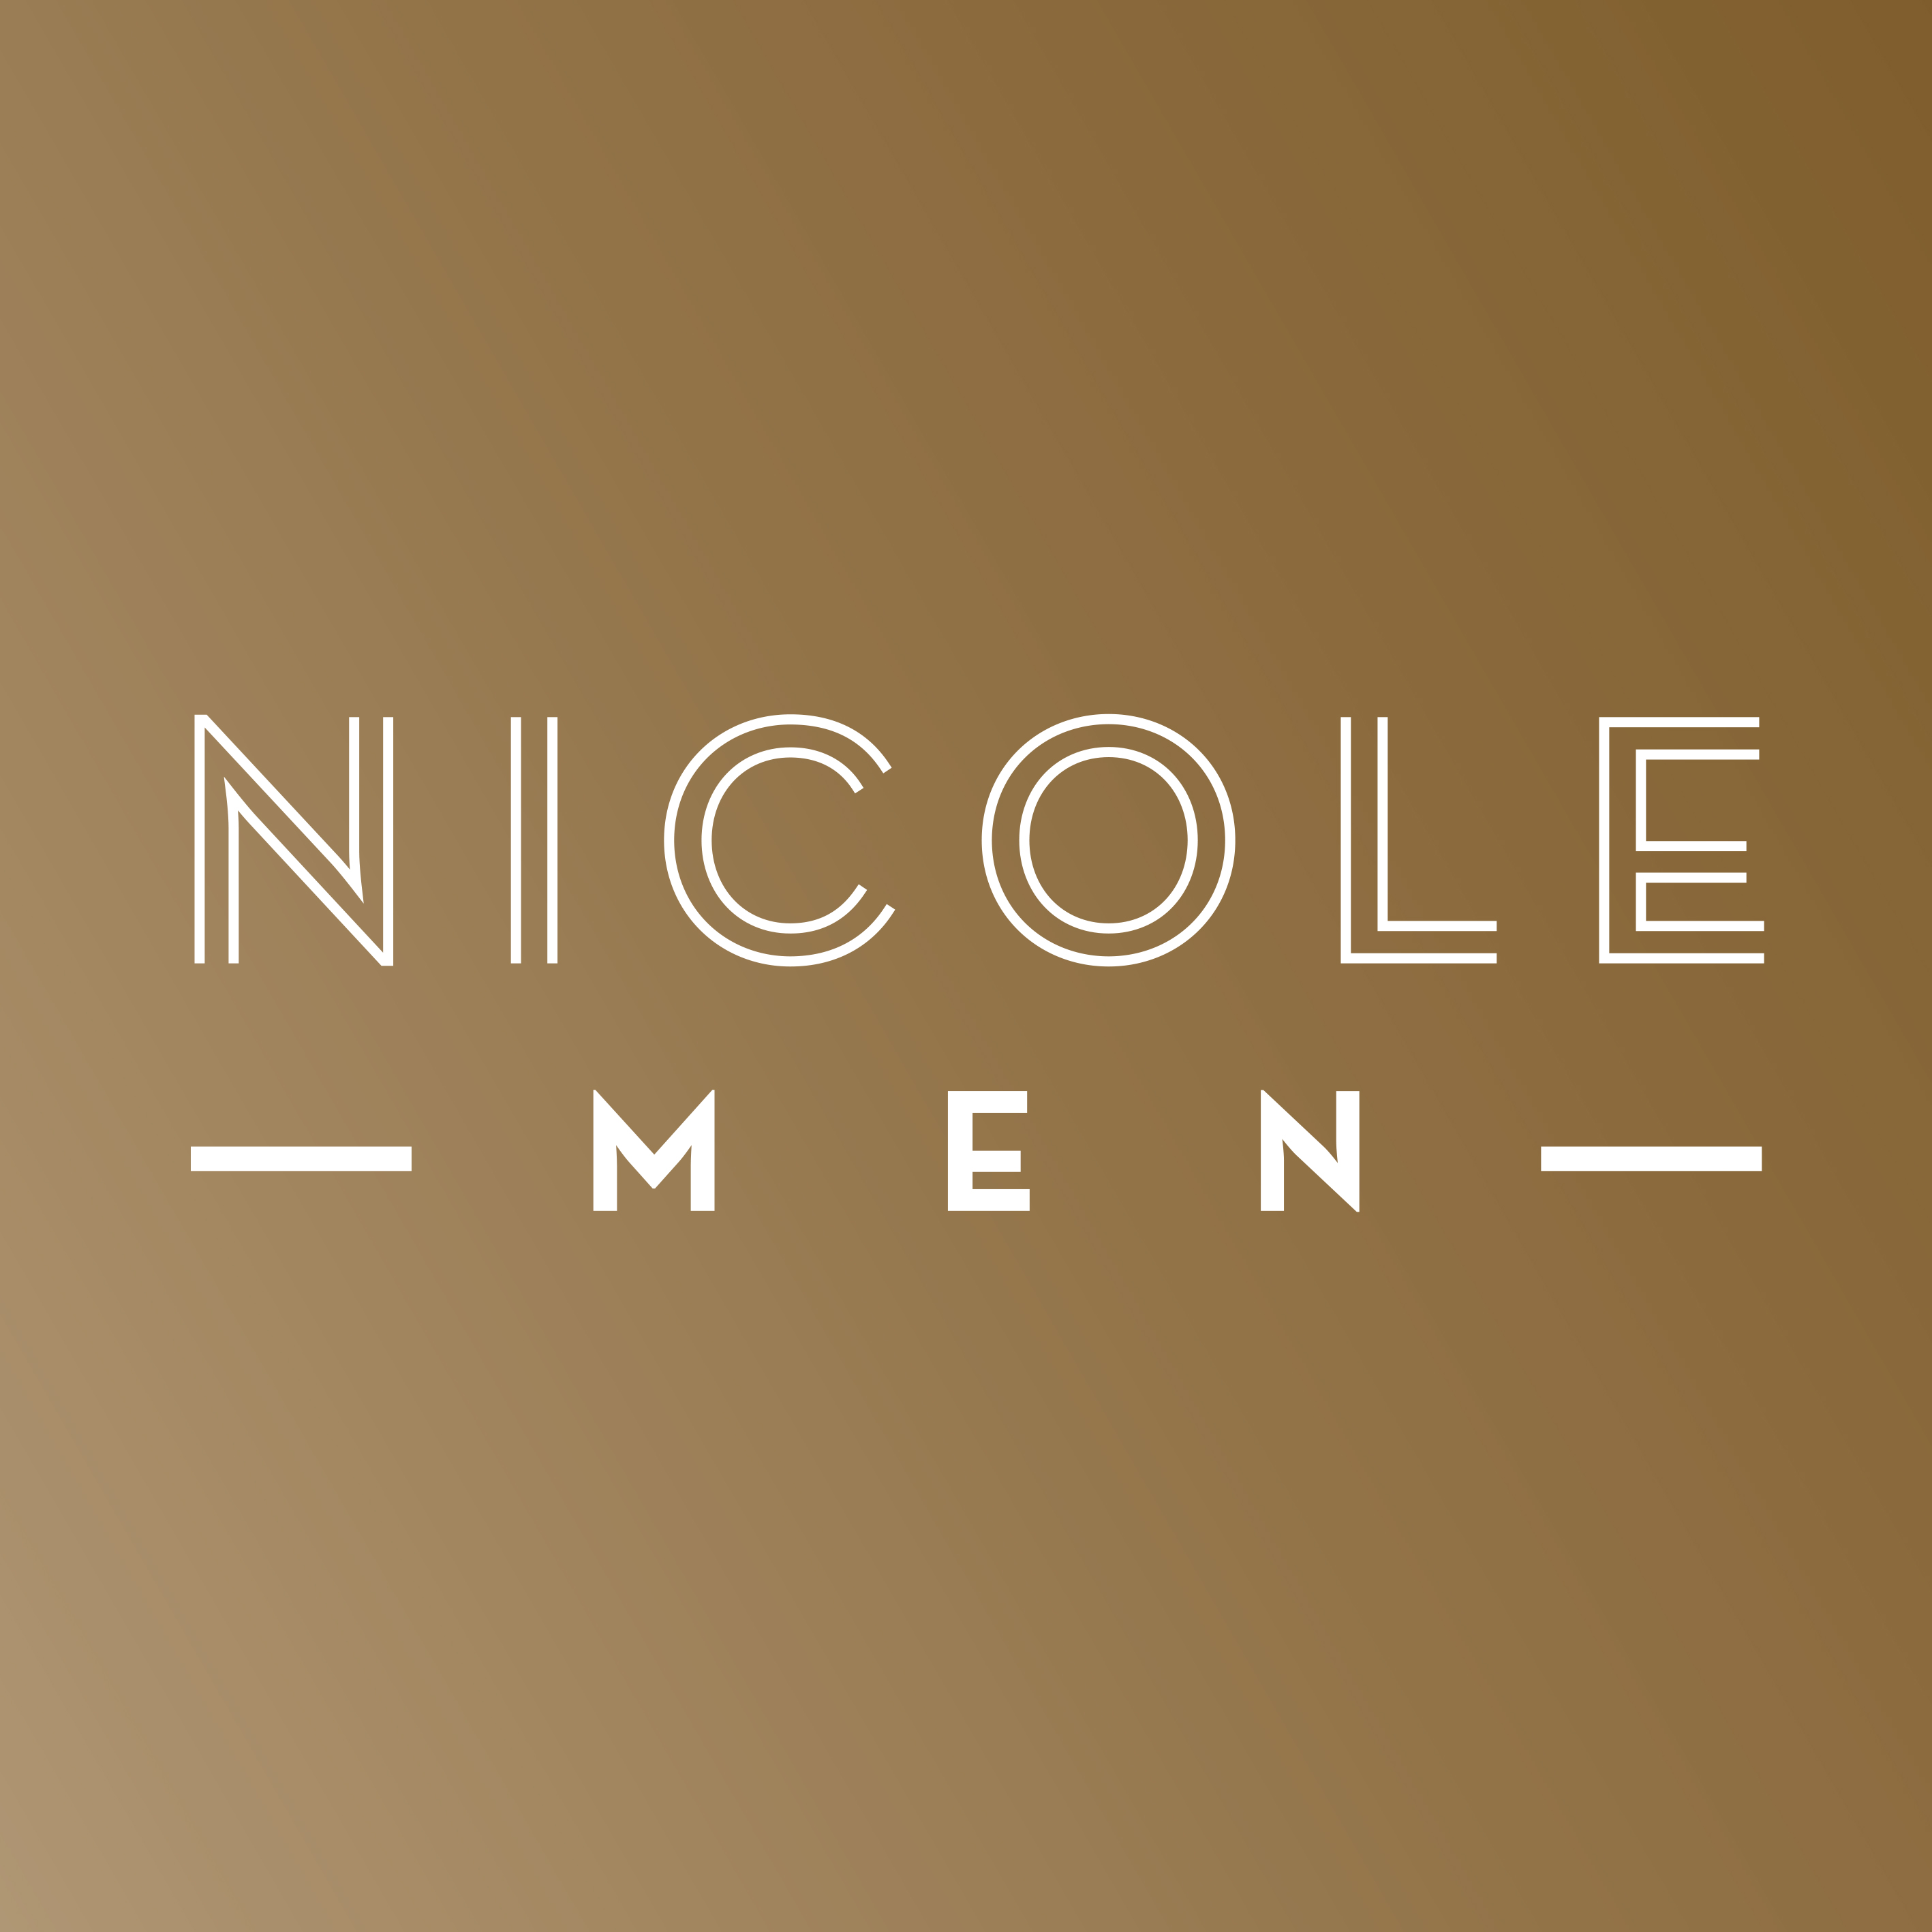 Nicole Men logo - Vrijmoed partner.jpg